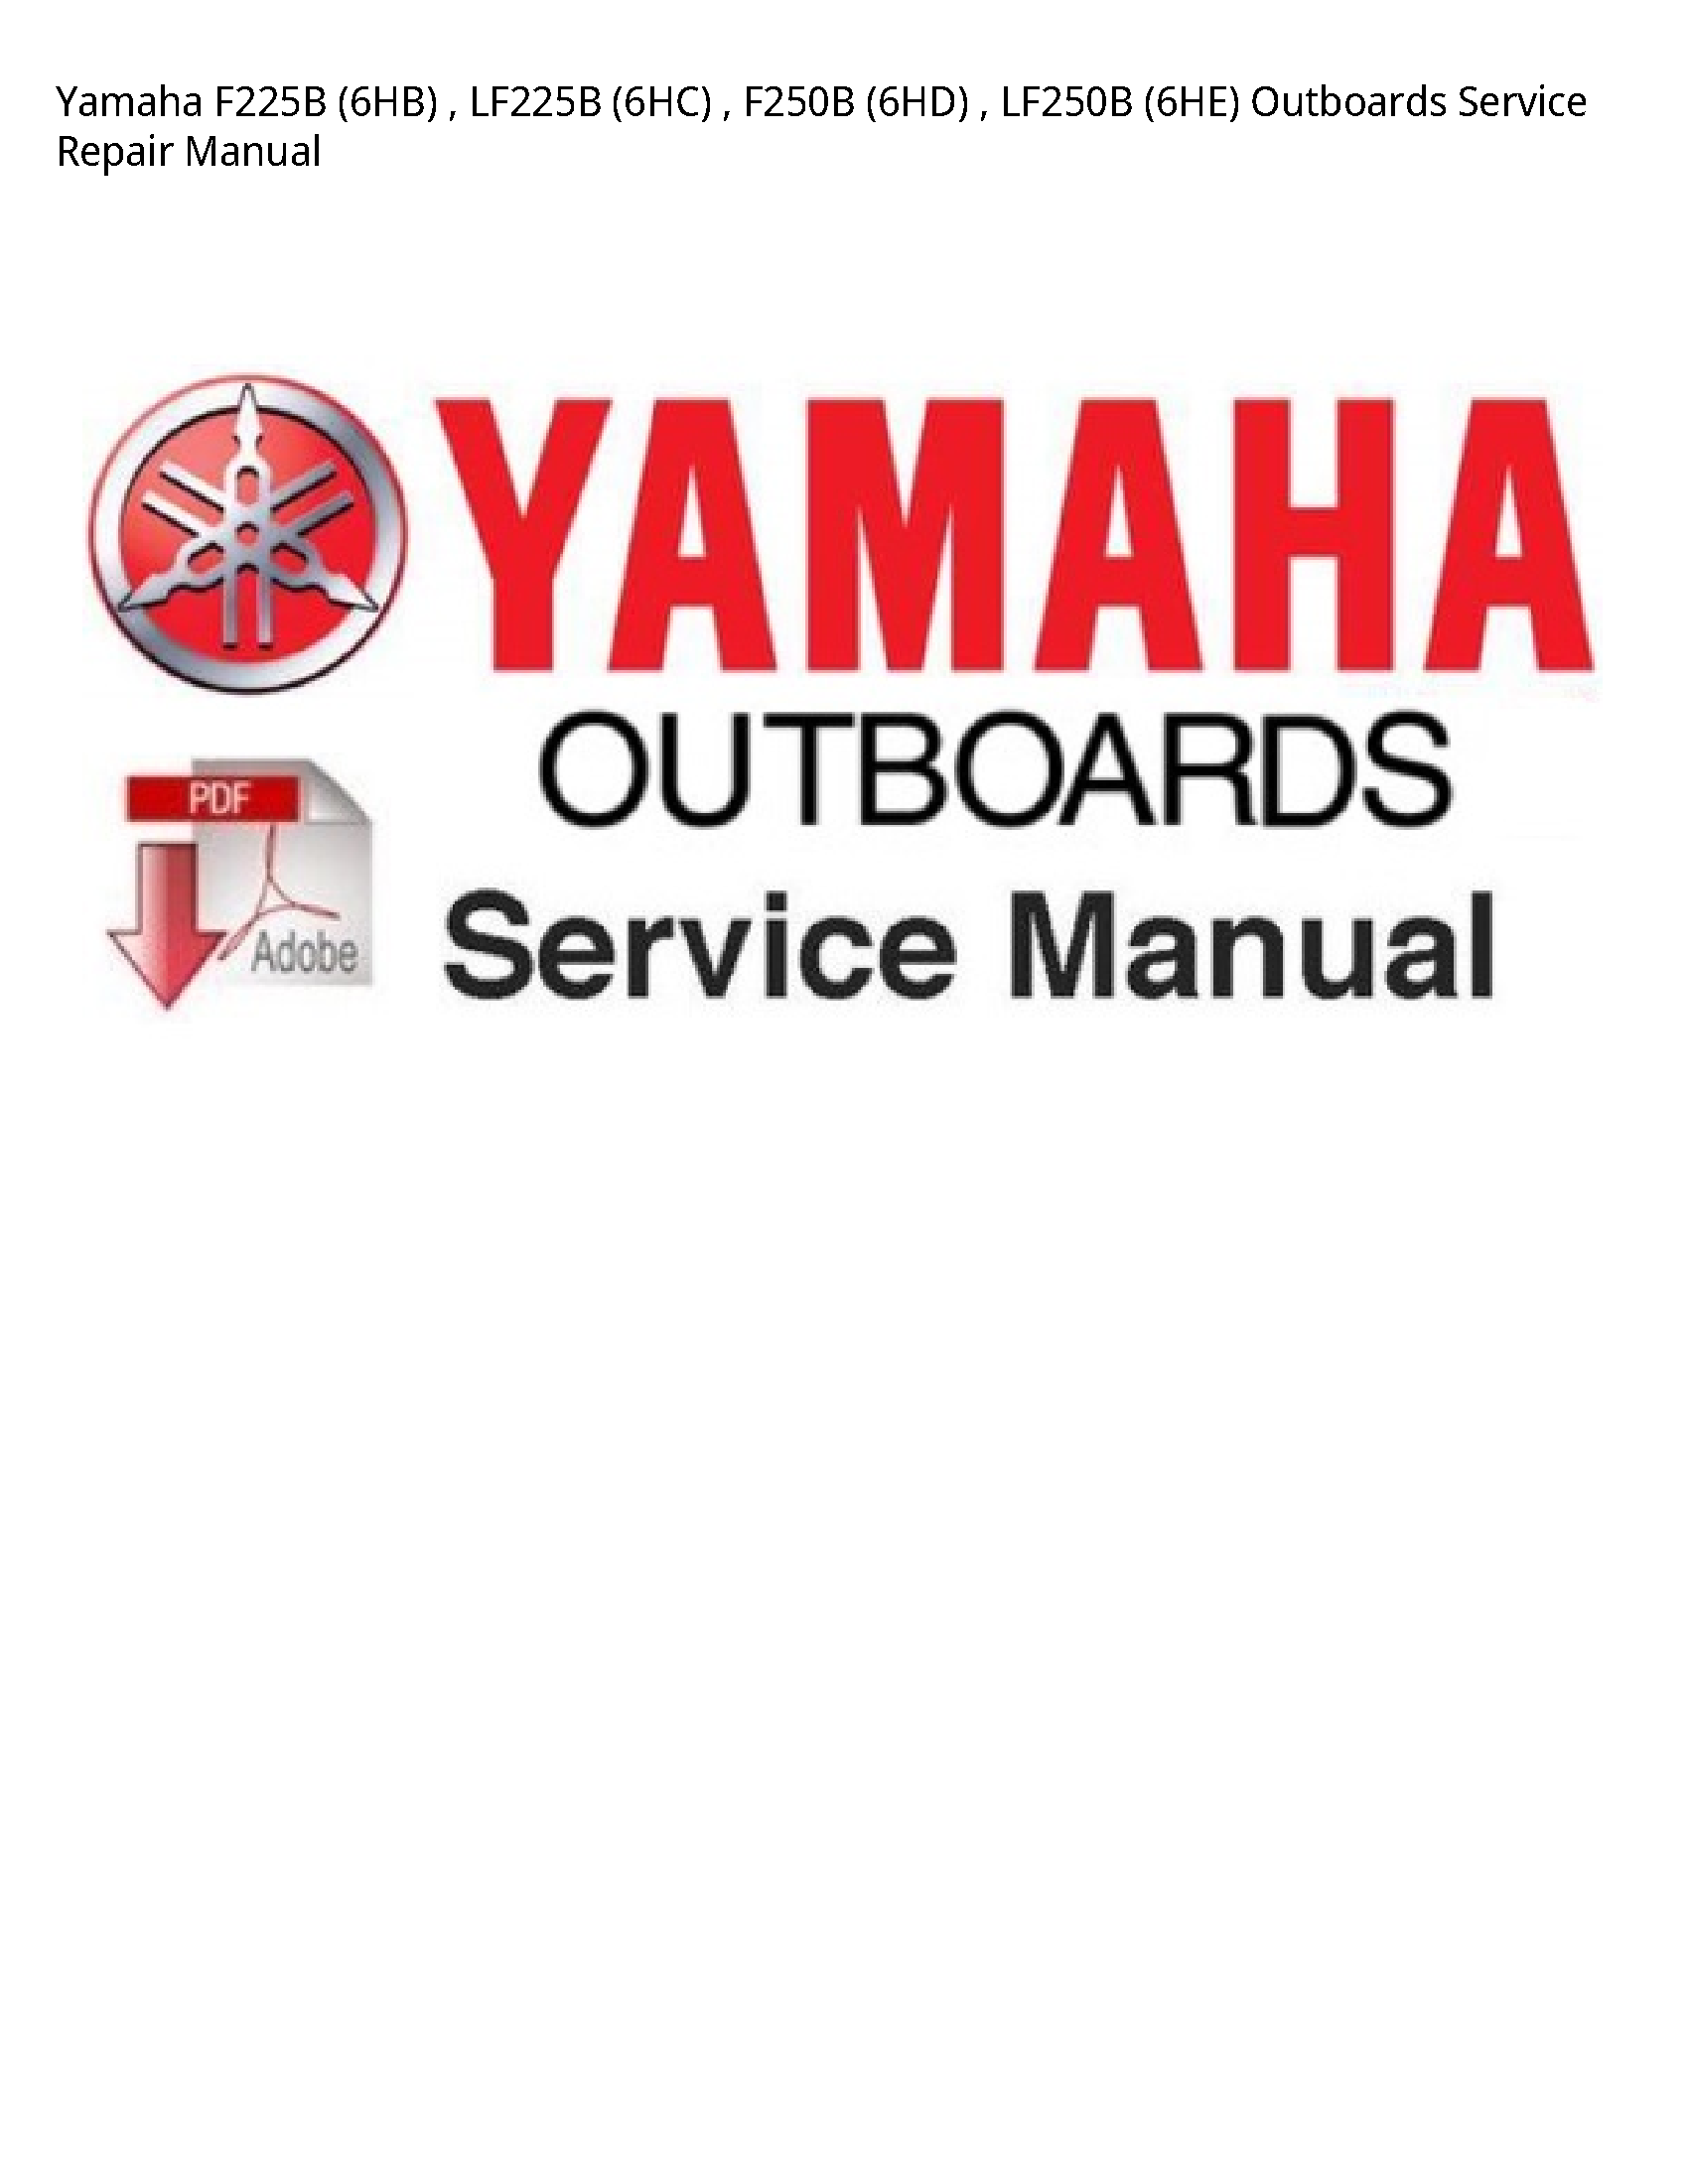 Yamaha F225B Outboards manual